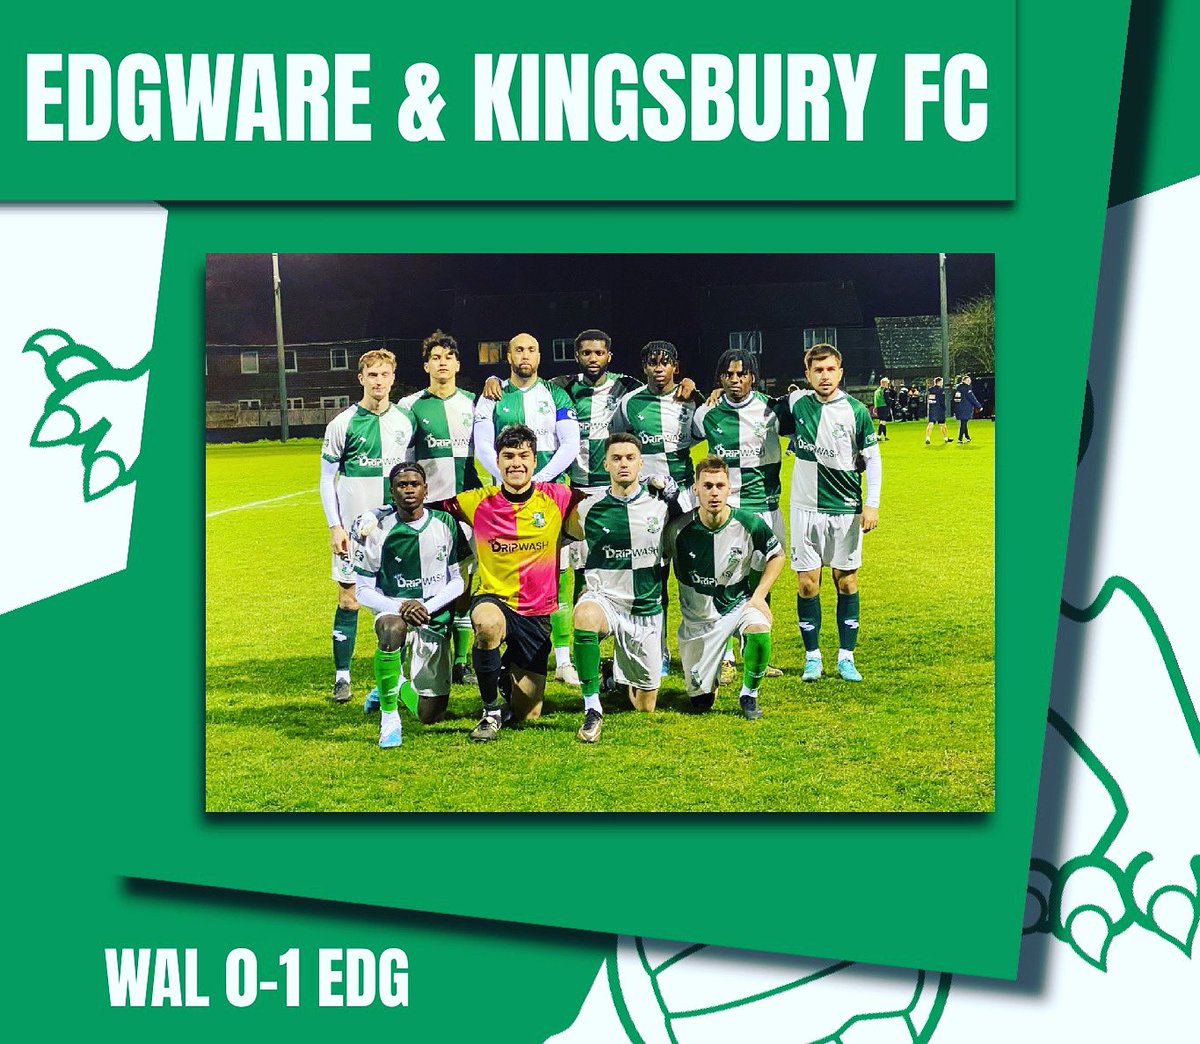 The Wares 💚🤍
.
#Wares #GreenArmy #Edgware #Kingsbury #FC #EandKFC #Win #CCL #Ballers #SocialMedia #TeamPhoto #COYW